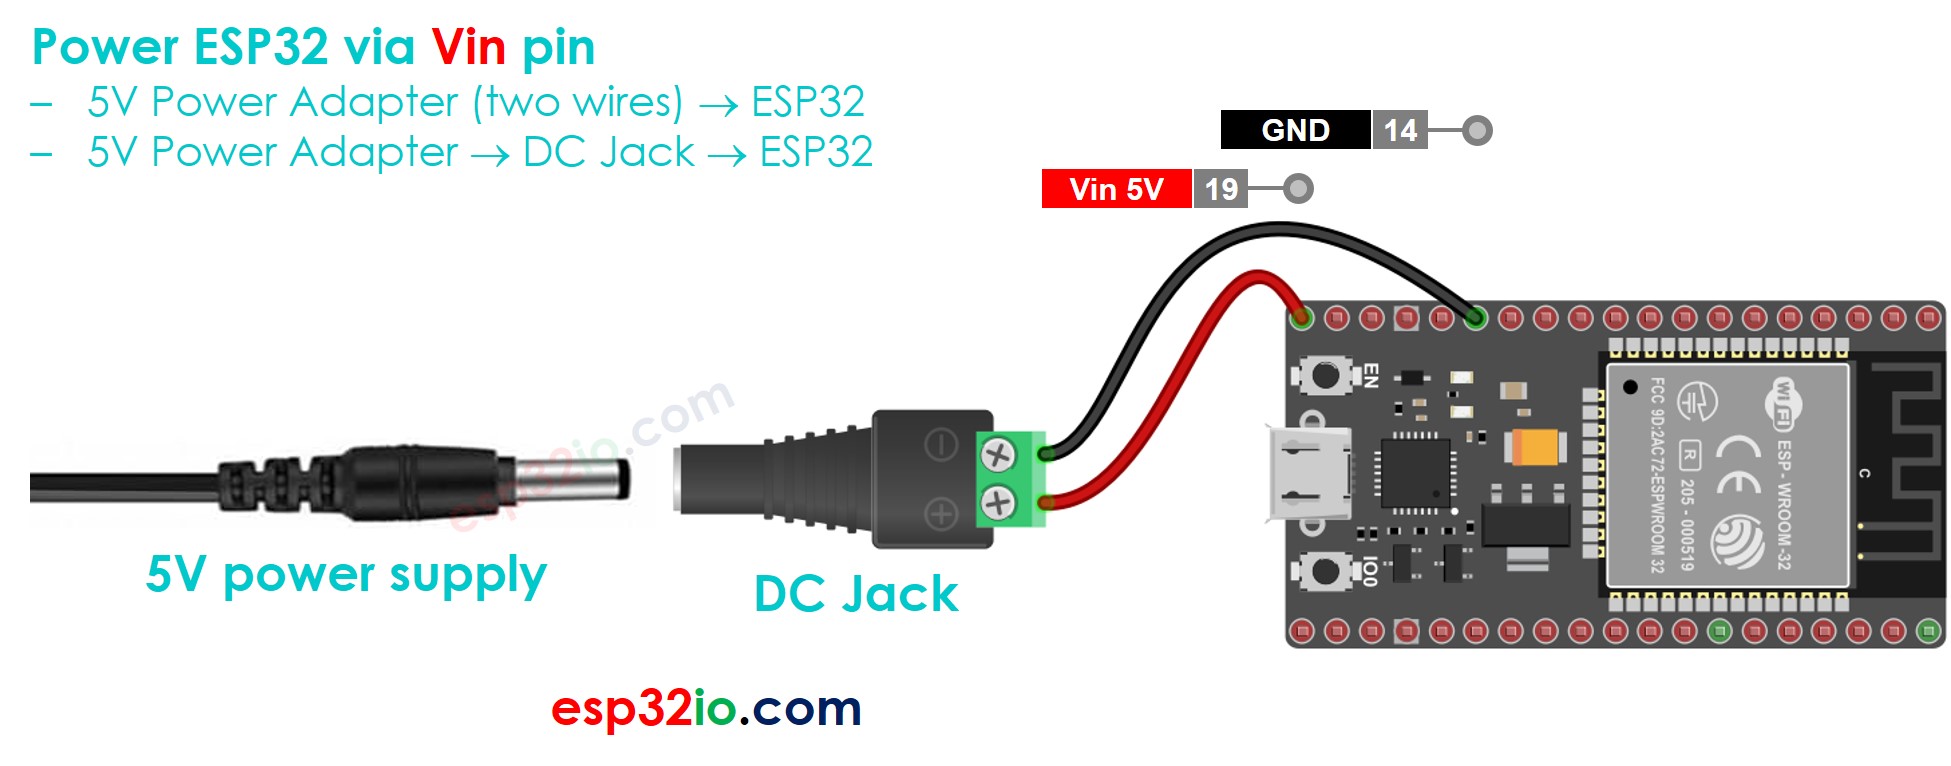 how to power ESP32 via Vin pin